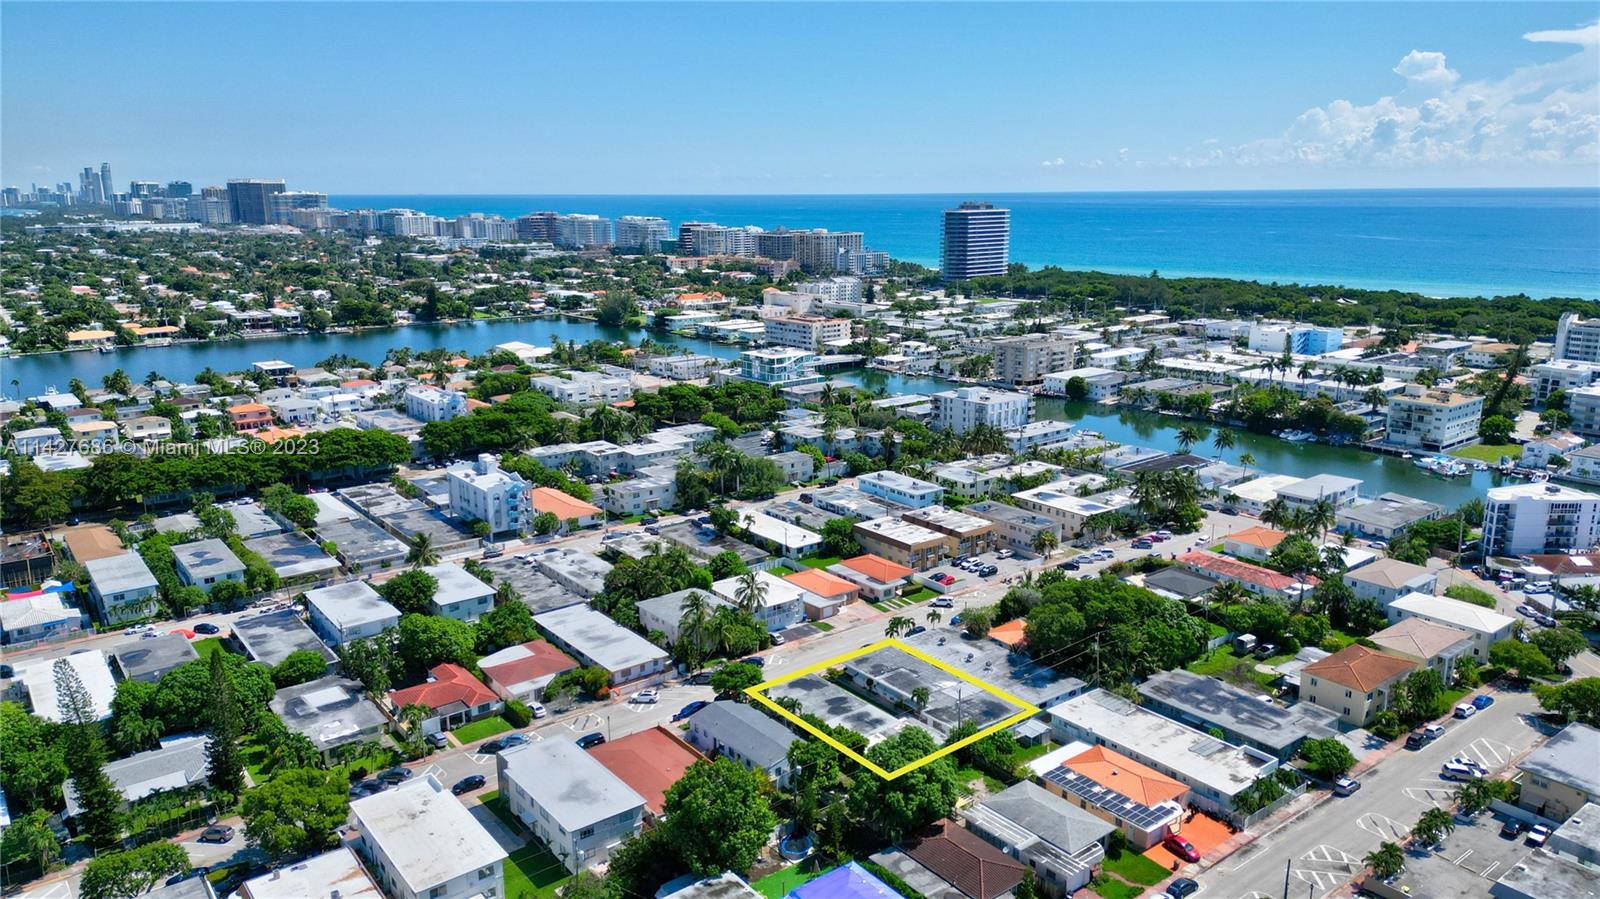 Rental Property at 700 82nd St, Miami Beach, Miami-Dade County, Florida -  - $1,280,000 MO.